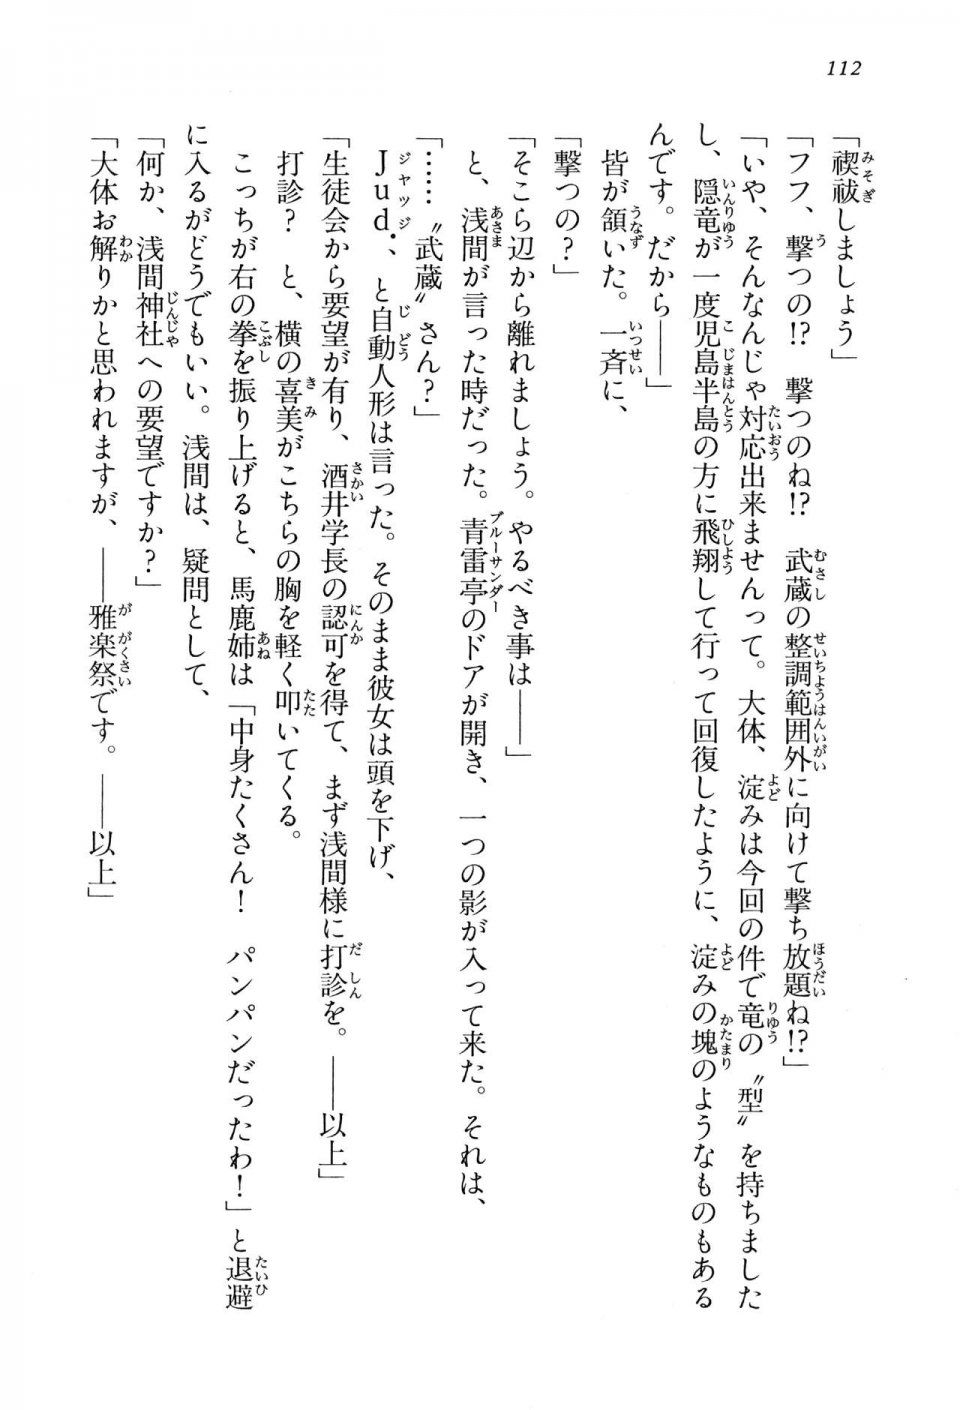 Kyoukai Senjou no Horizon BD Special Mininovel Vol 4(2B) - Photo #116